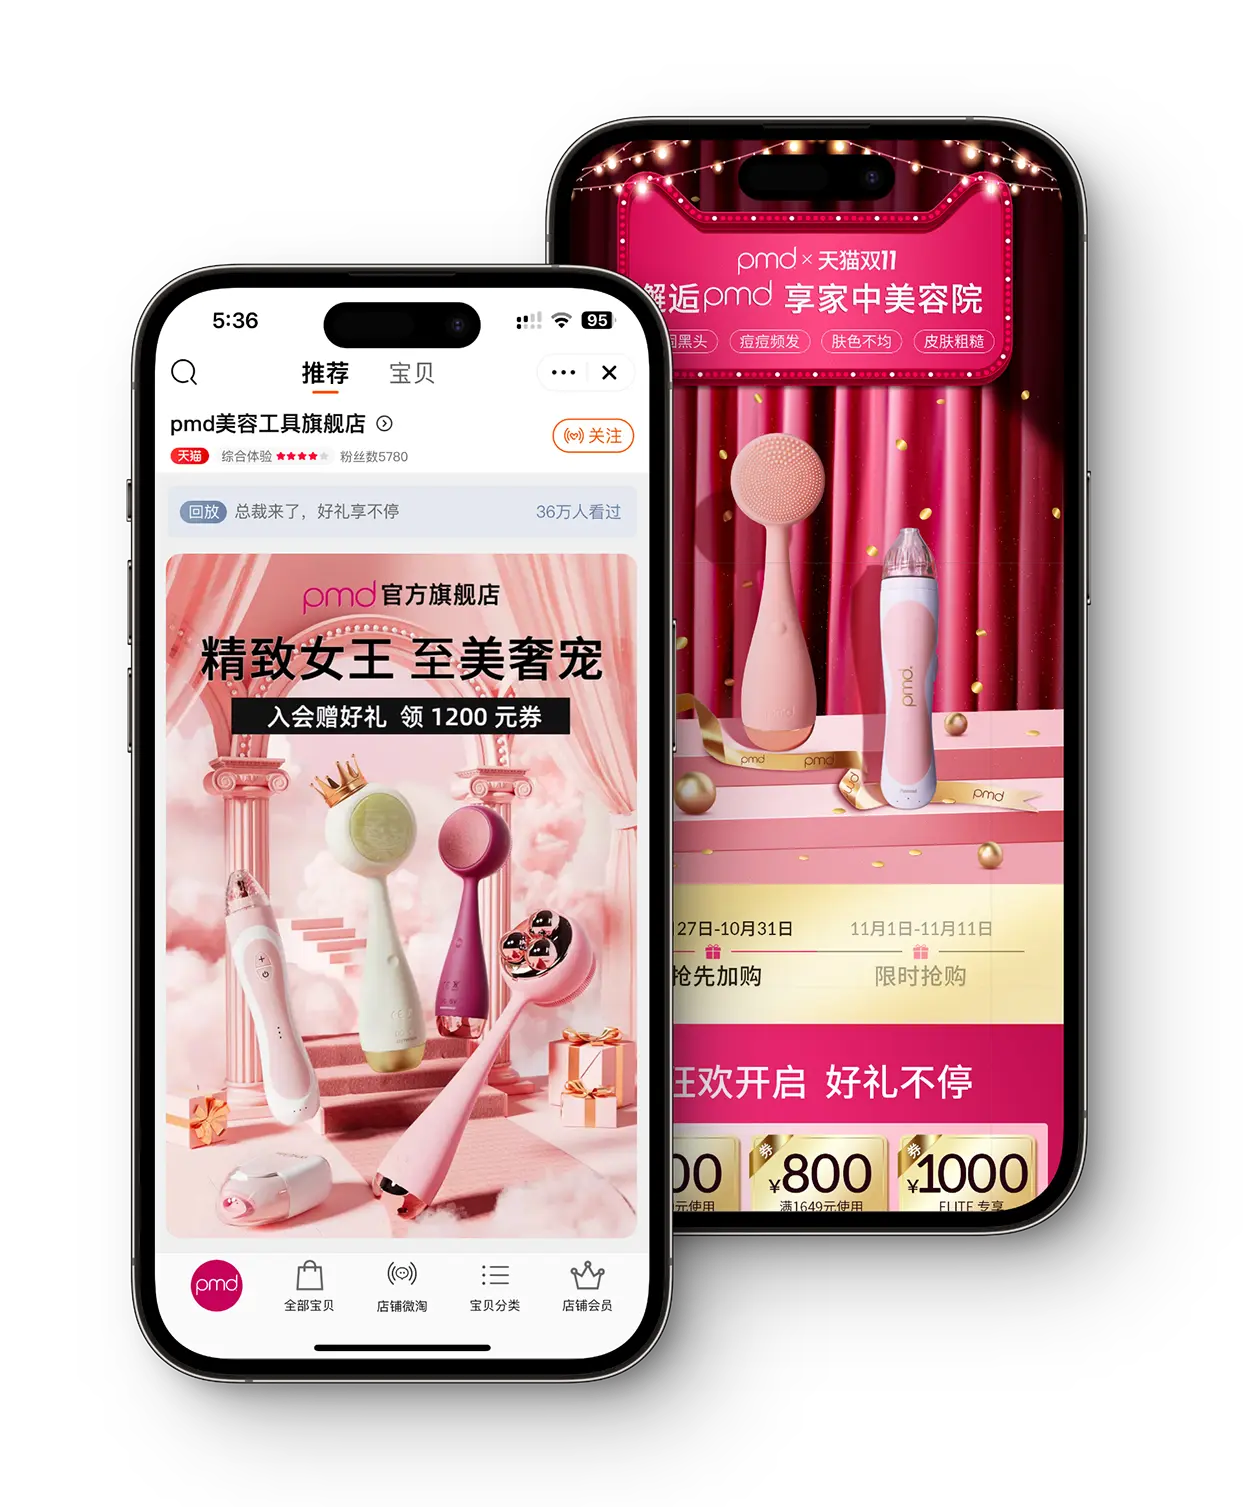 China e-commerce - Pmd Beauty mockup